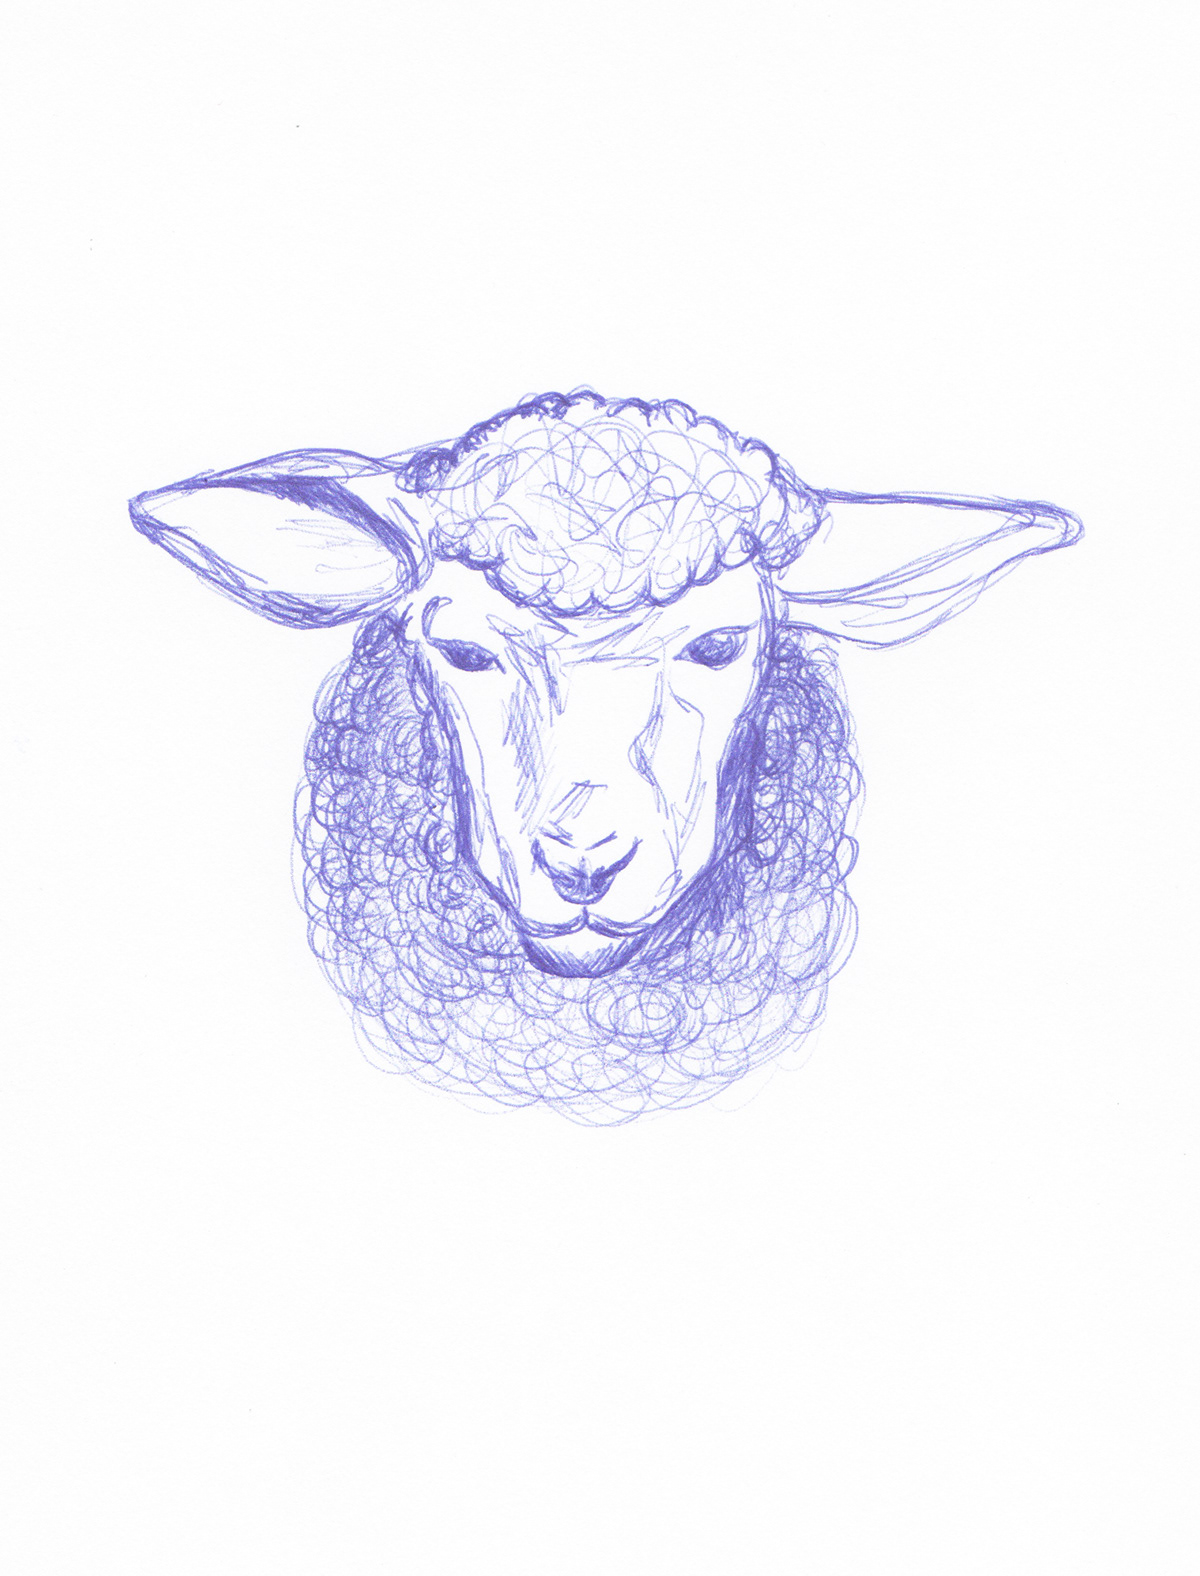 dessins animaux ferme mouton lapin cheval vache